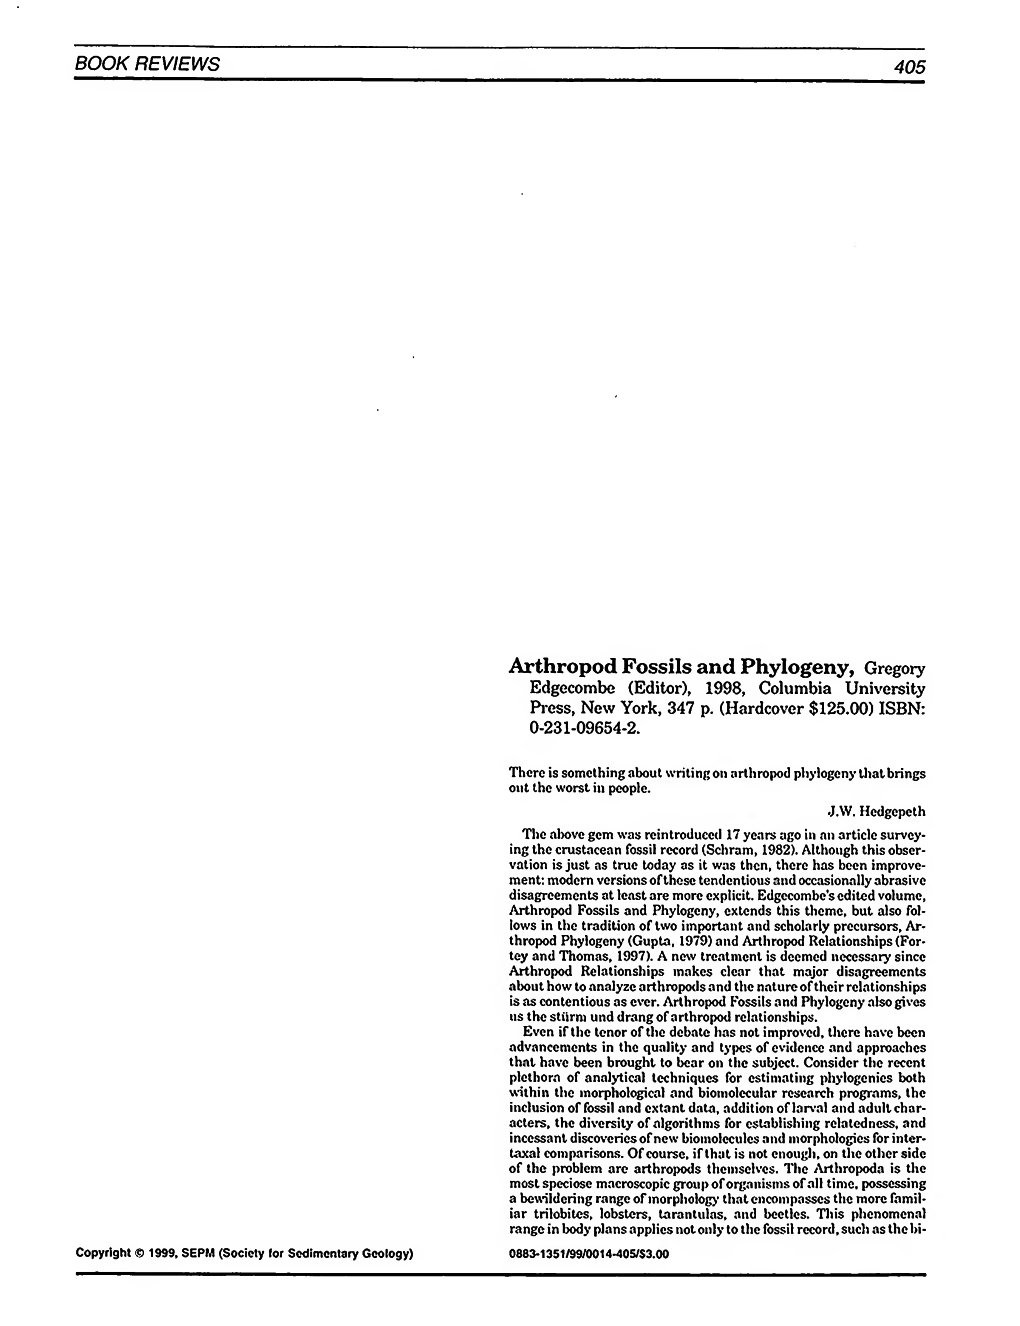 Arthropod Fossils and Phylogeny, Gregory Edgecombe (Editor), 1998, Columbia University Press, New York, 347 P